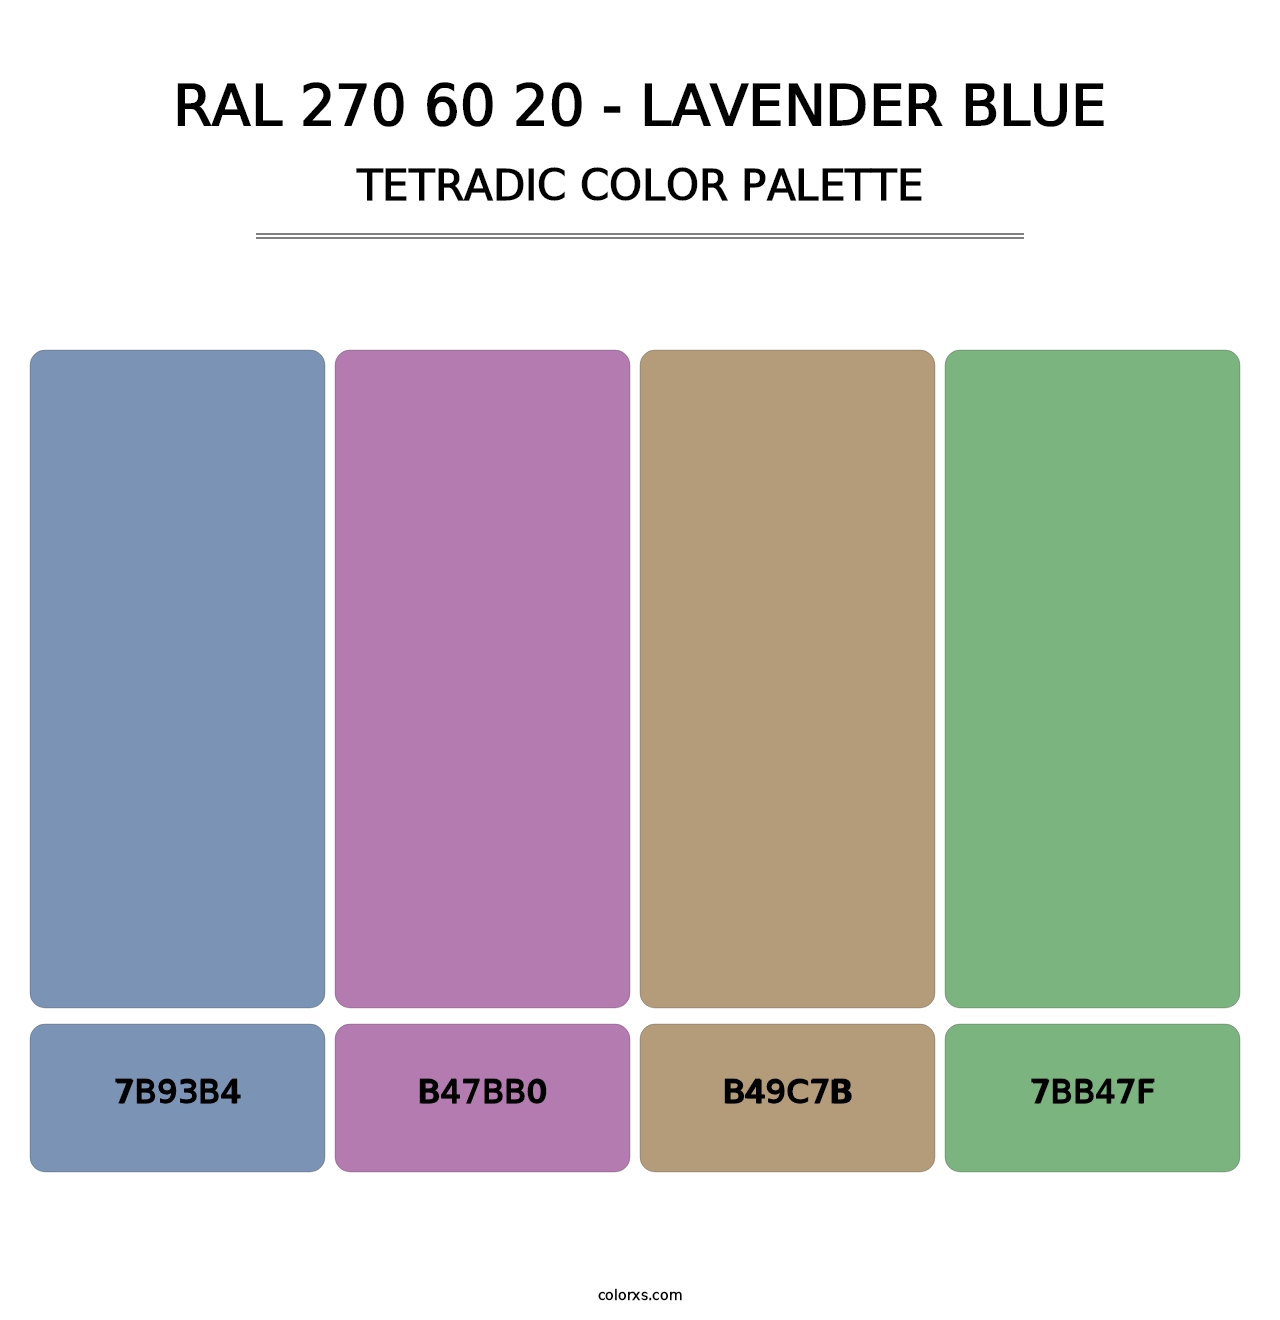 RAL 270 60 20 - Lavender Blue - Tetradic Color Palette